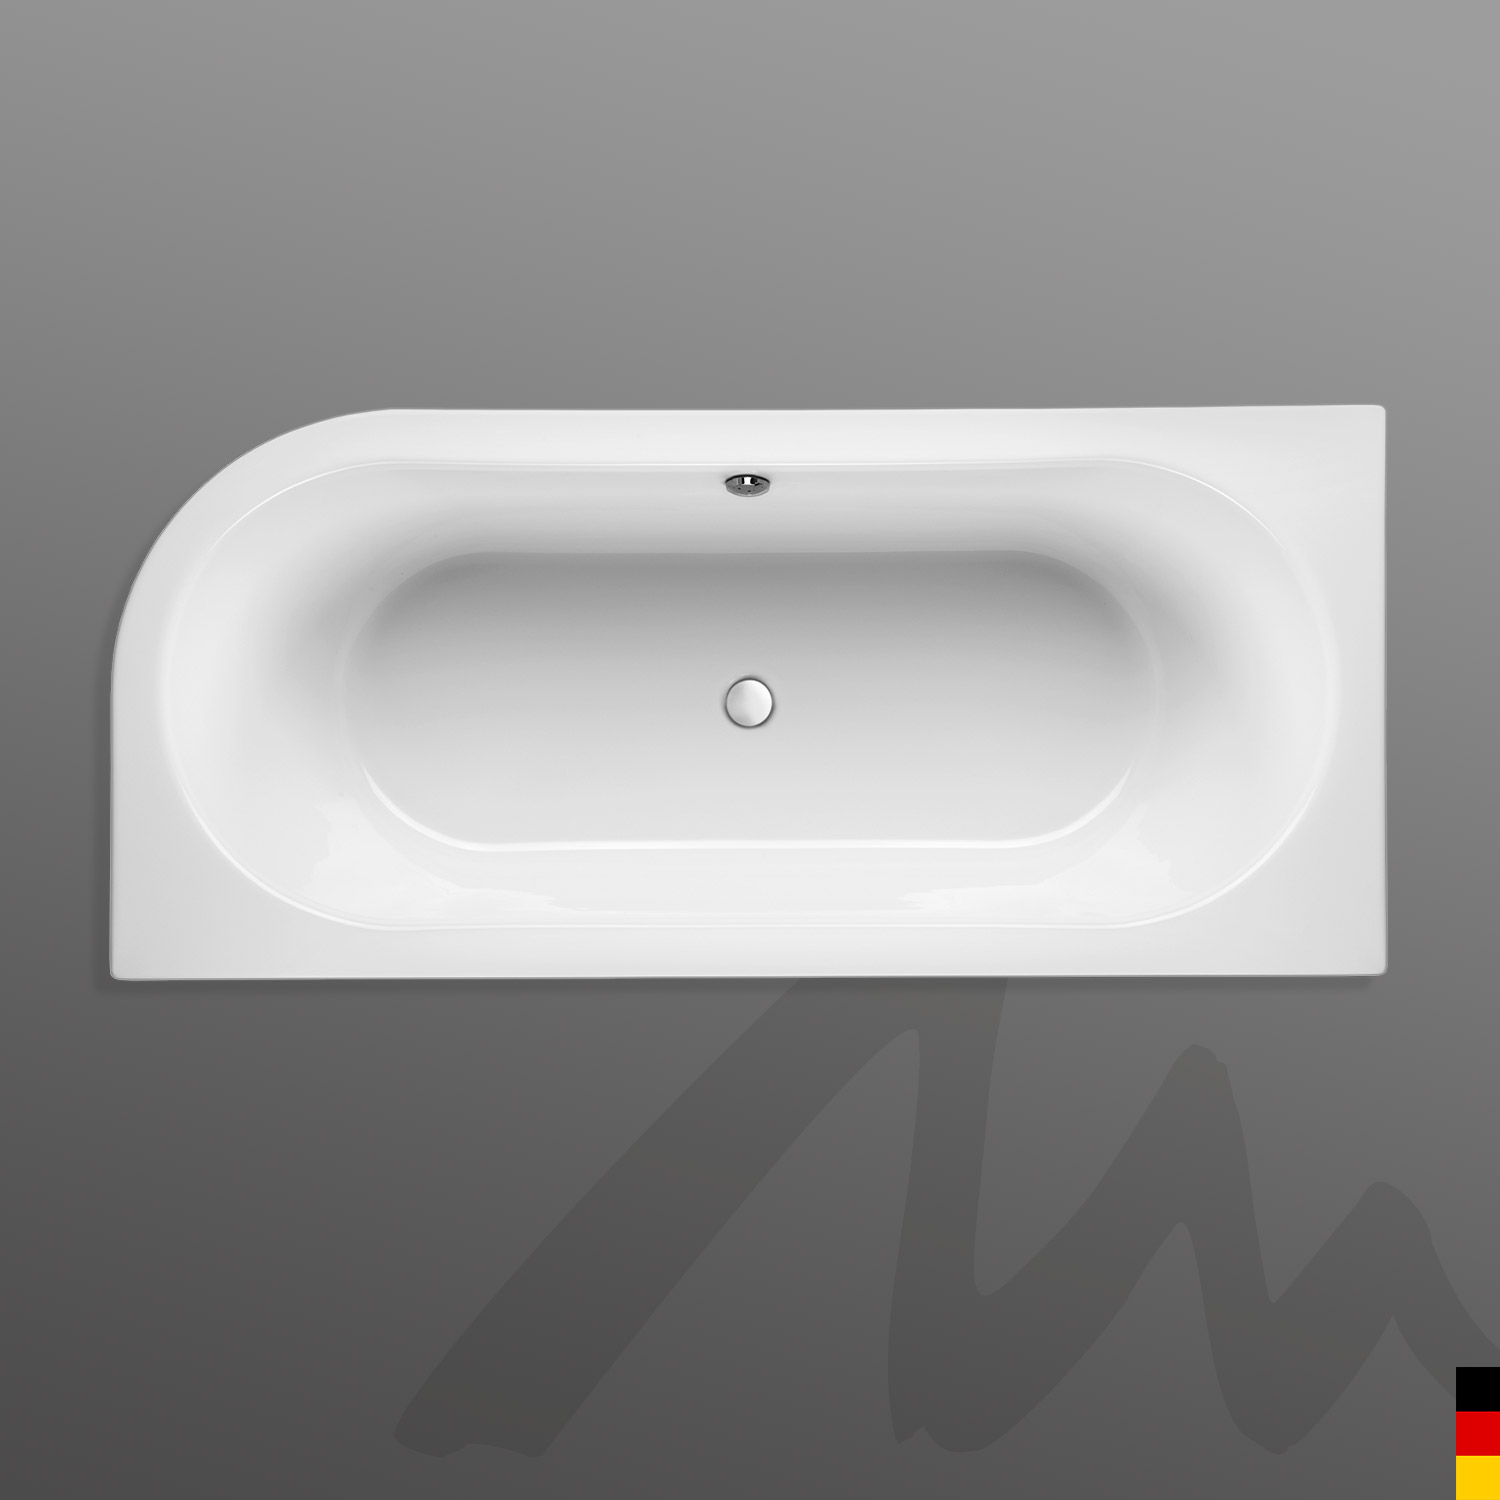 Mauersberger Badewanne Oval Primo 1 - 180/80 uno Ausführung links  180x80x45  Farbgruppe 2